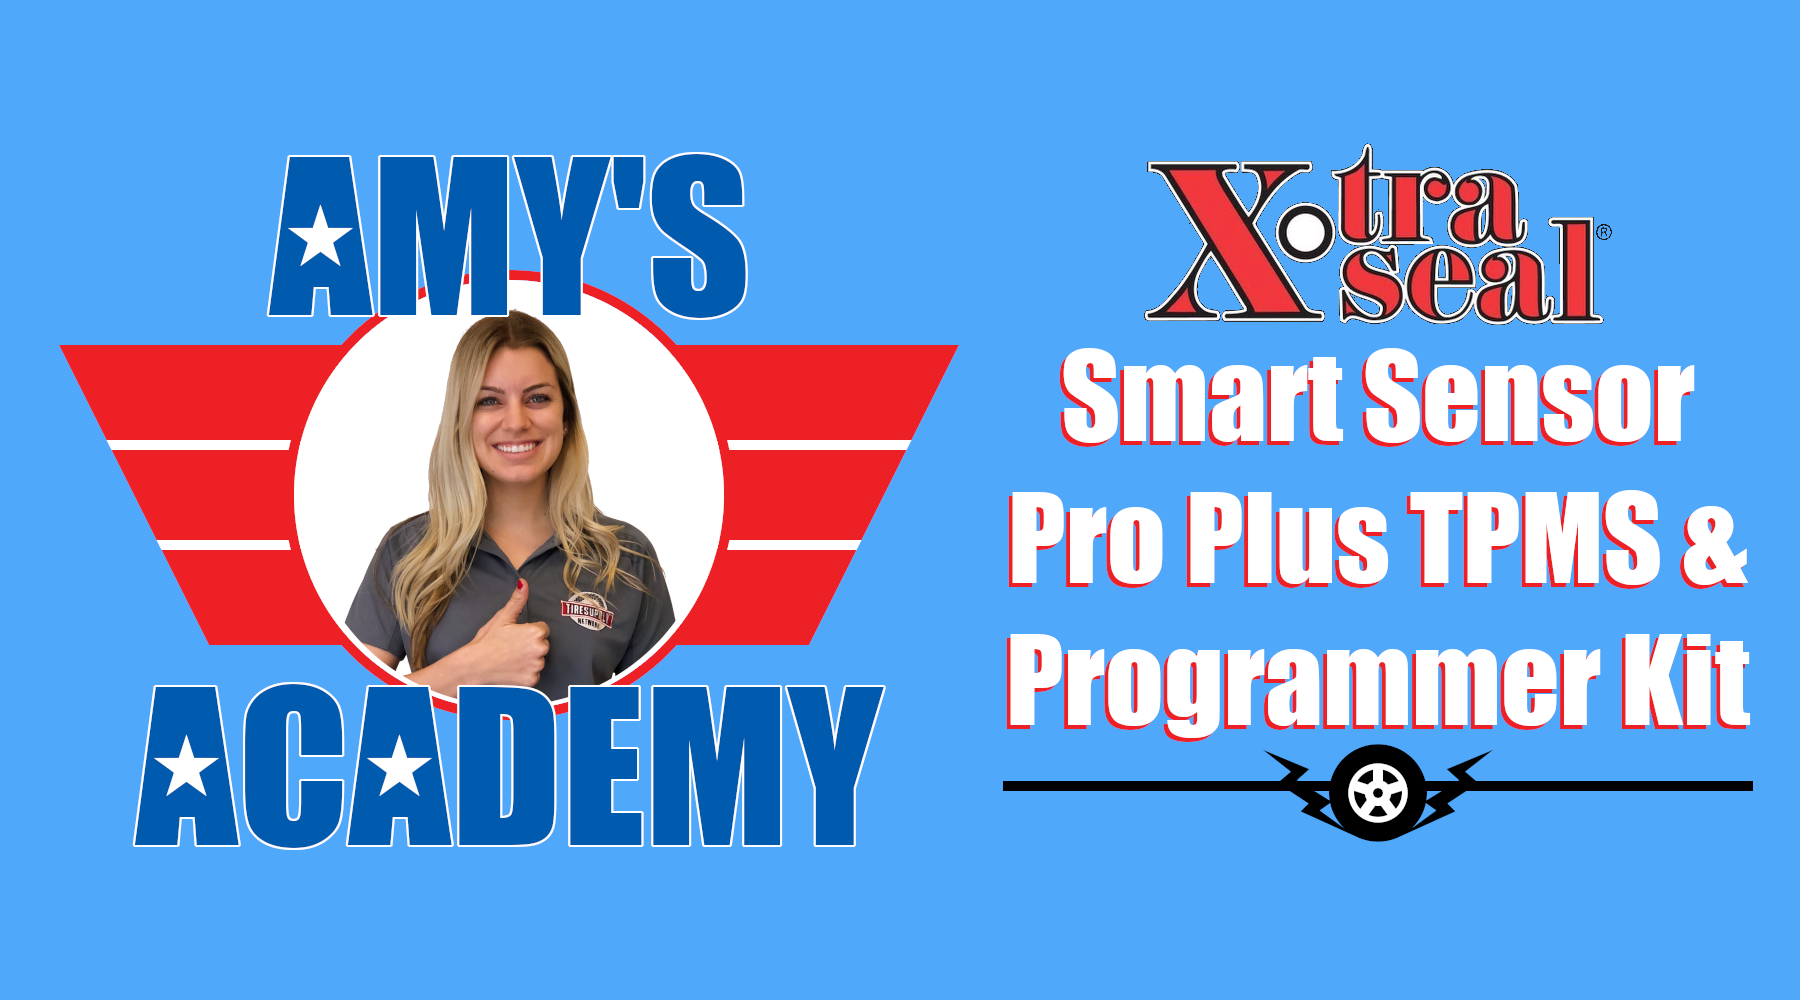 Amy's Academy | Xtra Seal Smart Sensor Pro Plus TPMS & Programmer Kit Video!